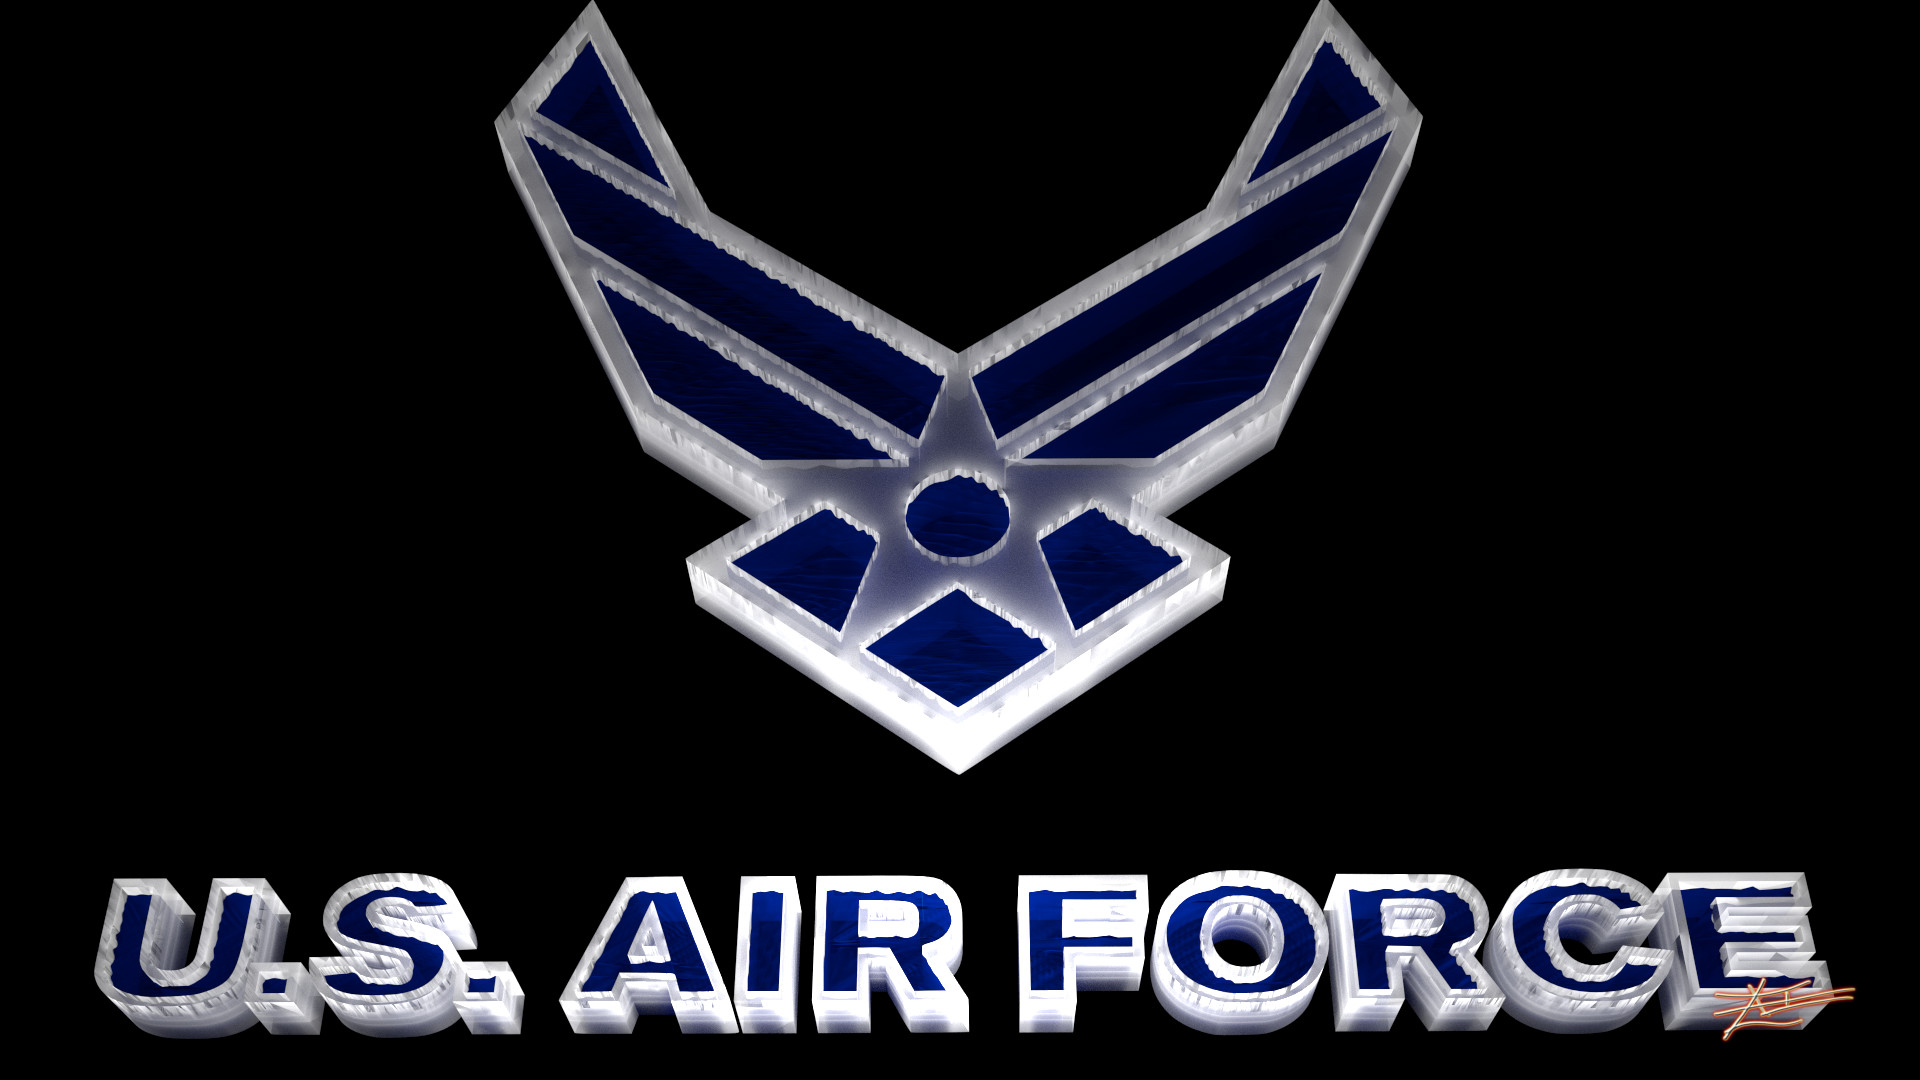 US Air Force Wallpaper (67+ images)
 Usaf Logo Wallpaper Hd